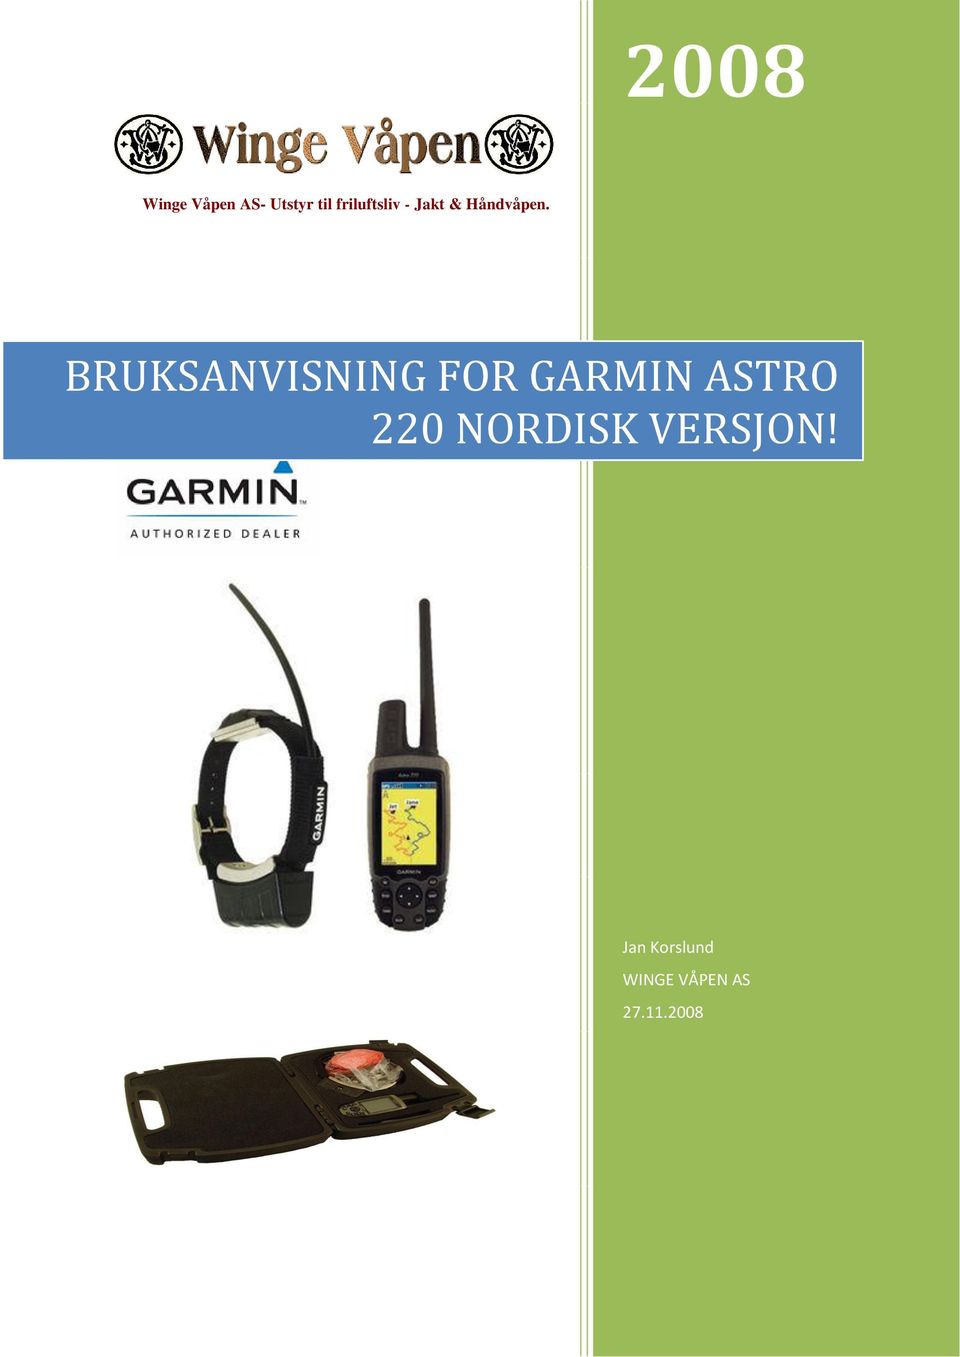 BRUKSANVISNING FOR GARMIN ASTRO 220